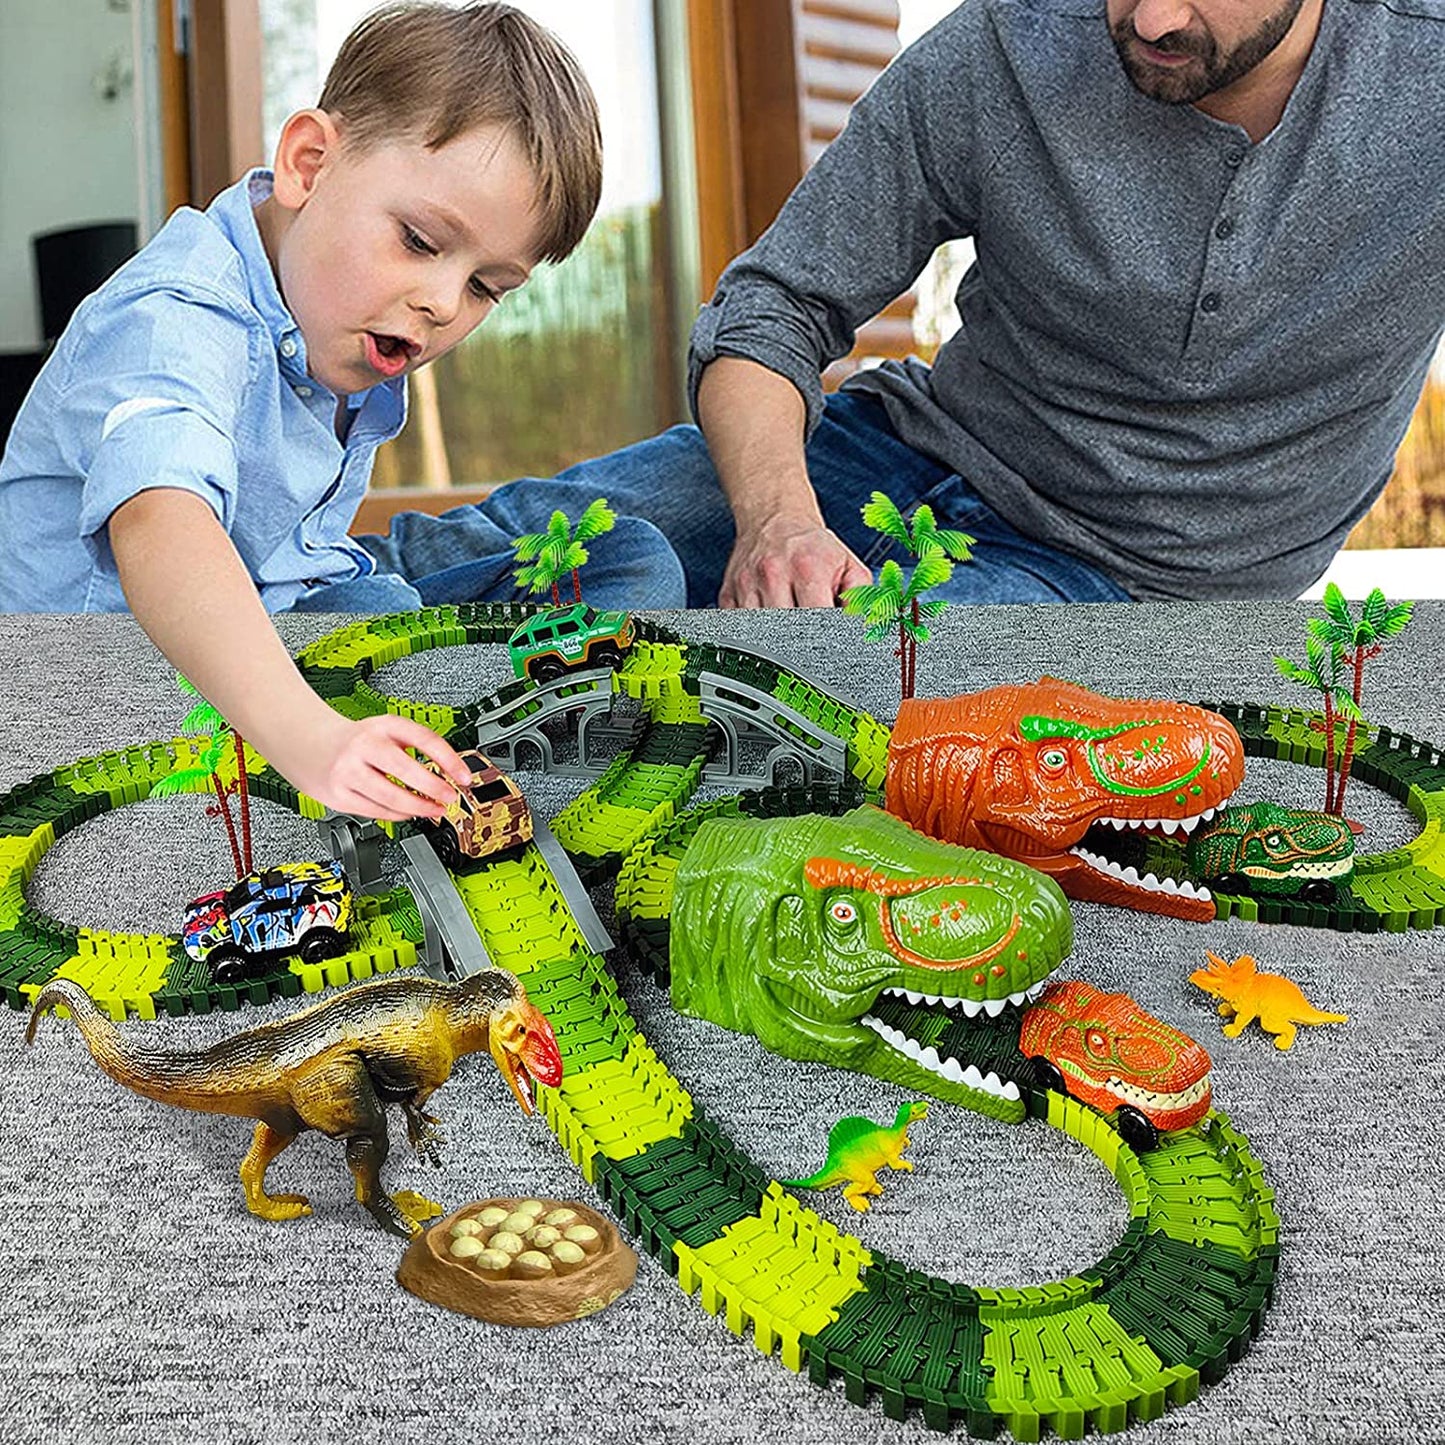 The Ultimate Dinosaur Track Set